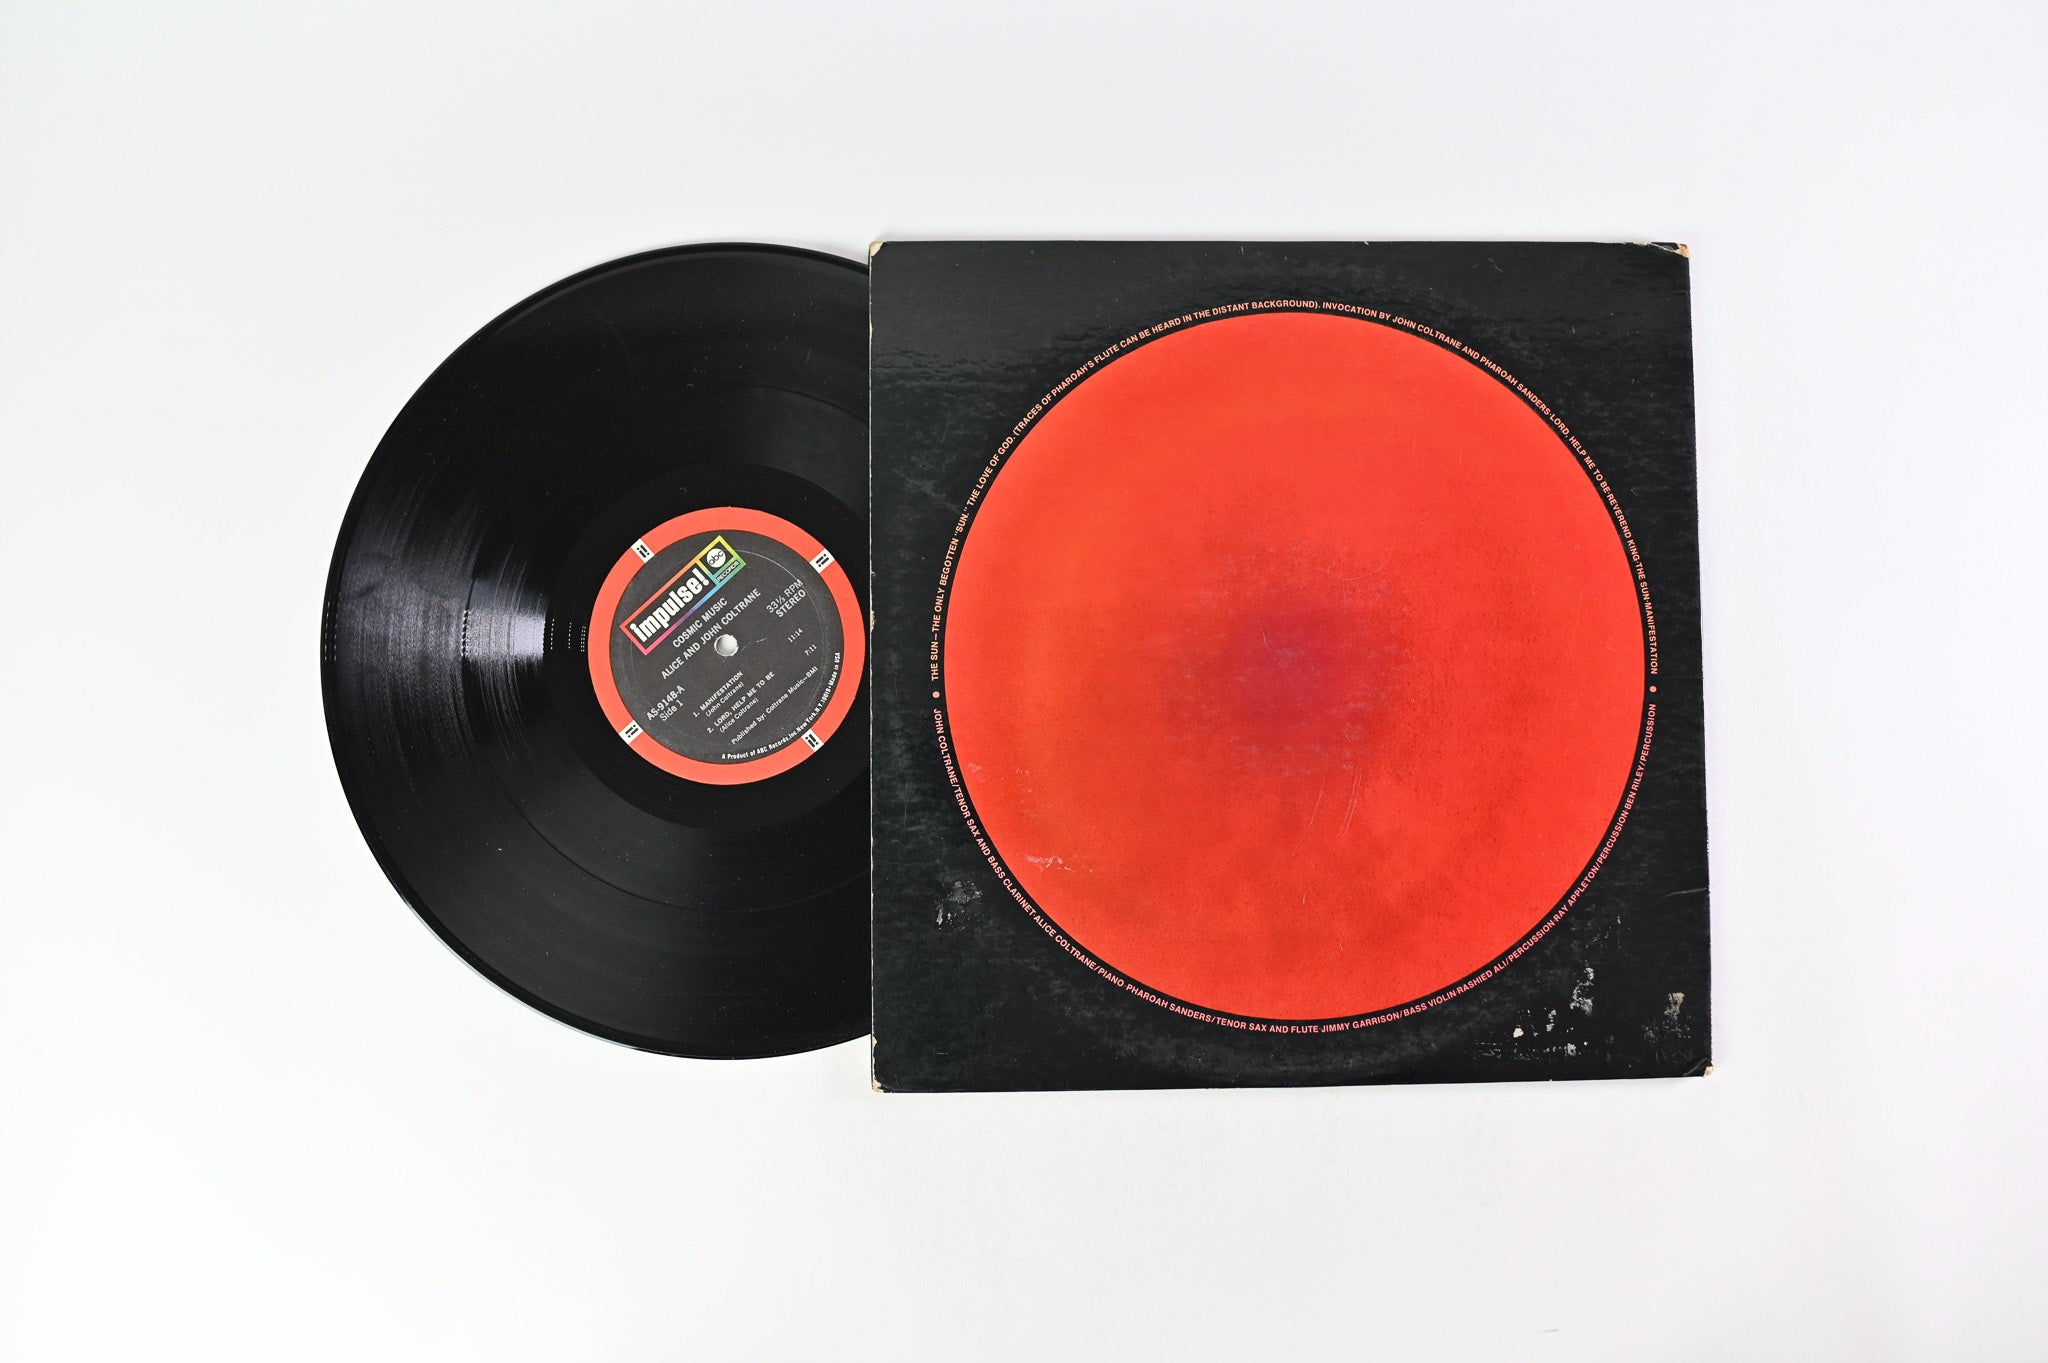 John Coltrane  & Alice Coltrane - Cosmic Music on ABC Impulse Reissue